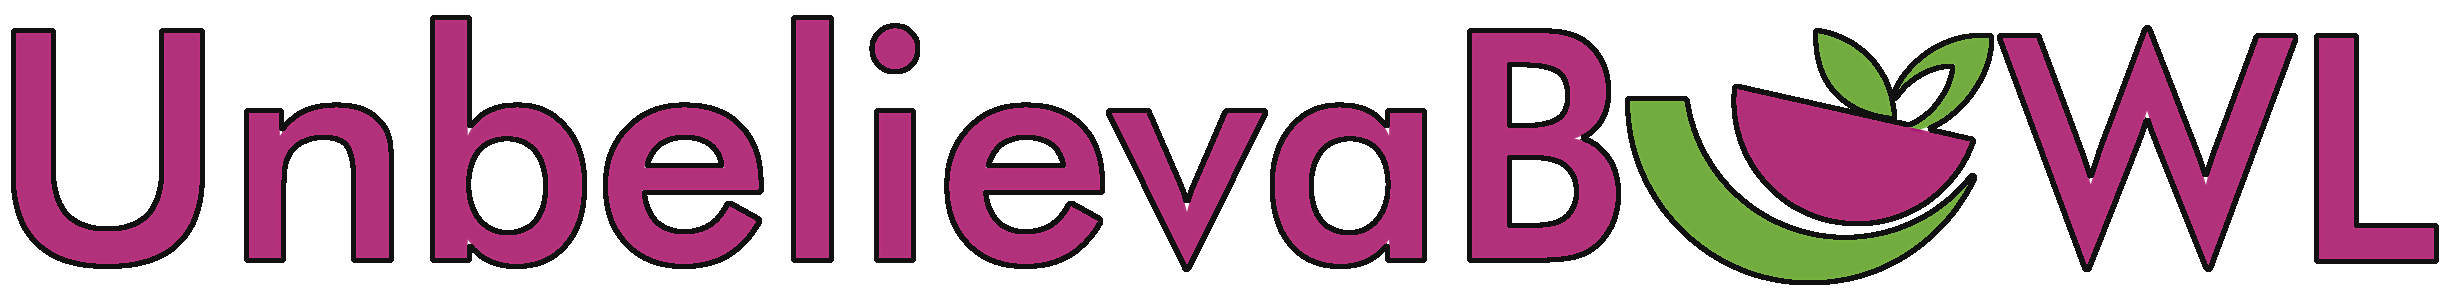 Unbelievabowl Logo